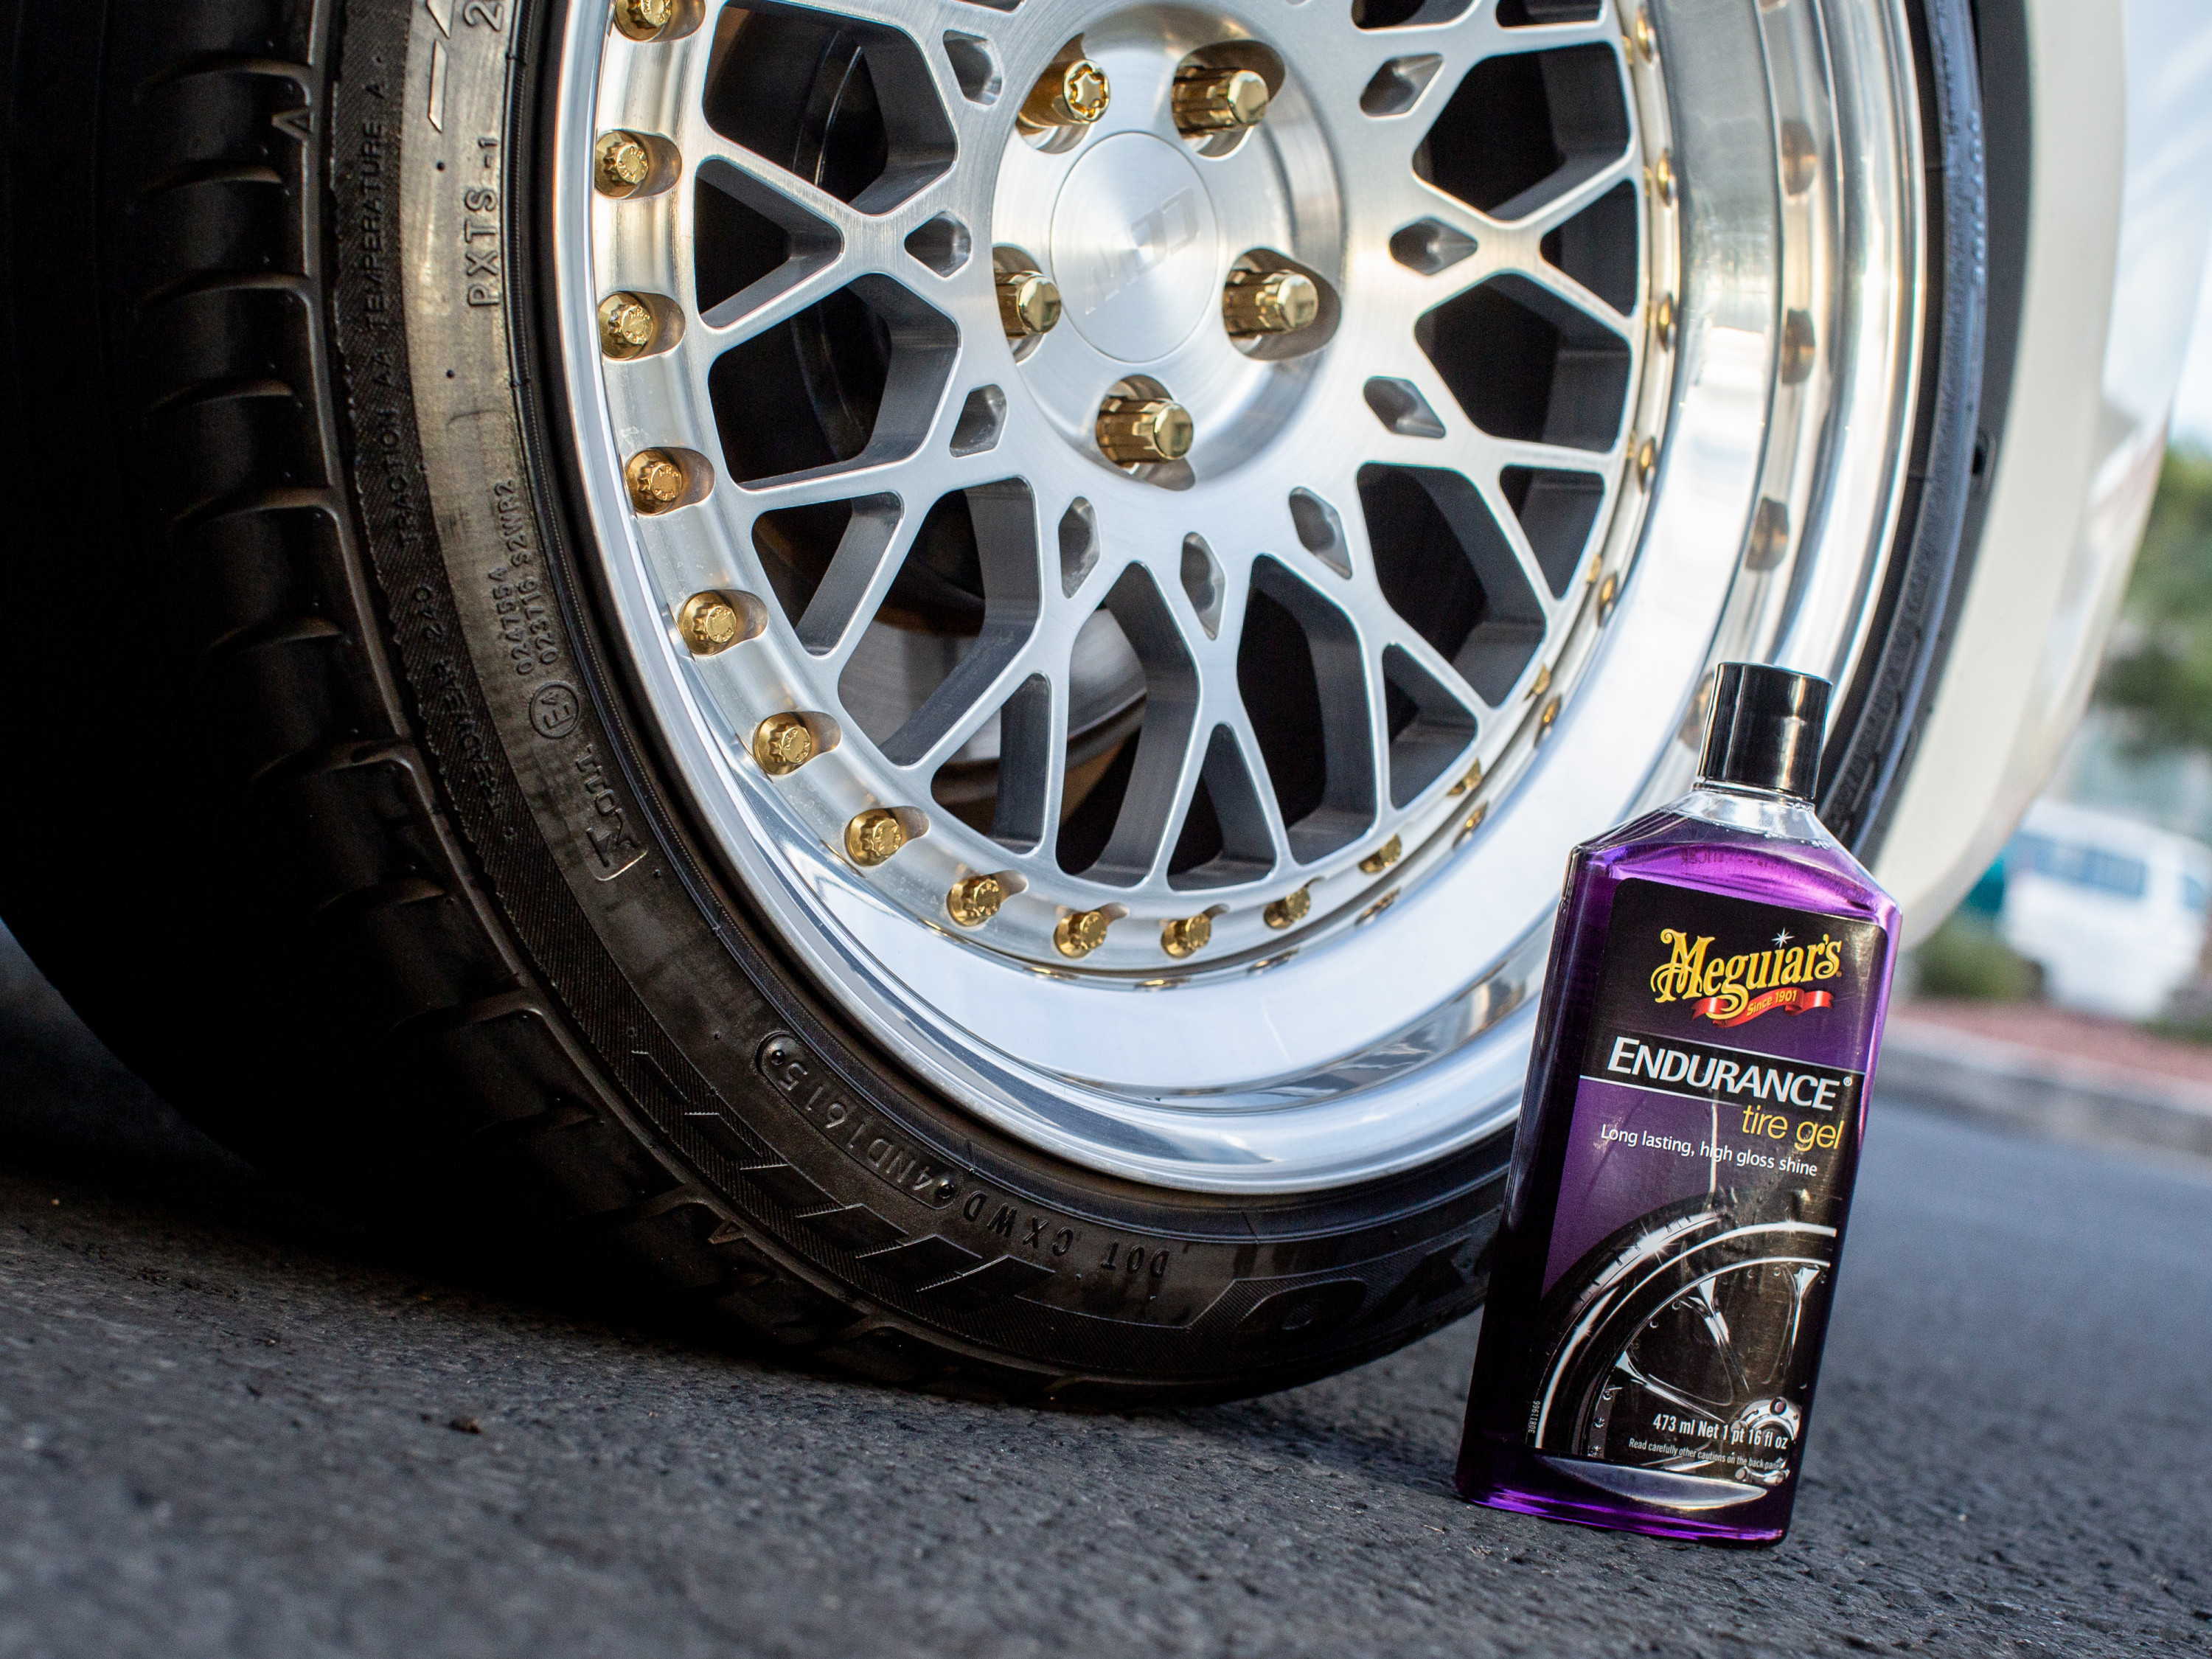 Meguiar's Endurance Tire Gel, Rich Purple Liquid, Glossy Shine - Tire Care, 16 Oz - image 5 of 9